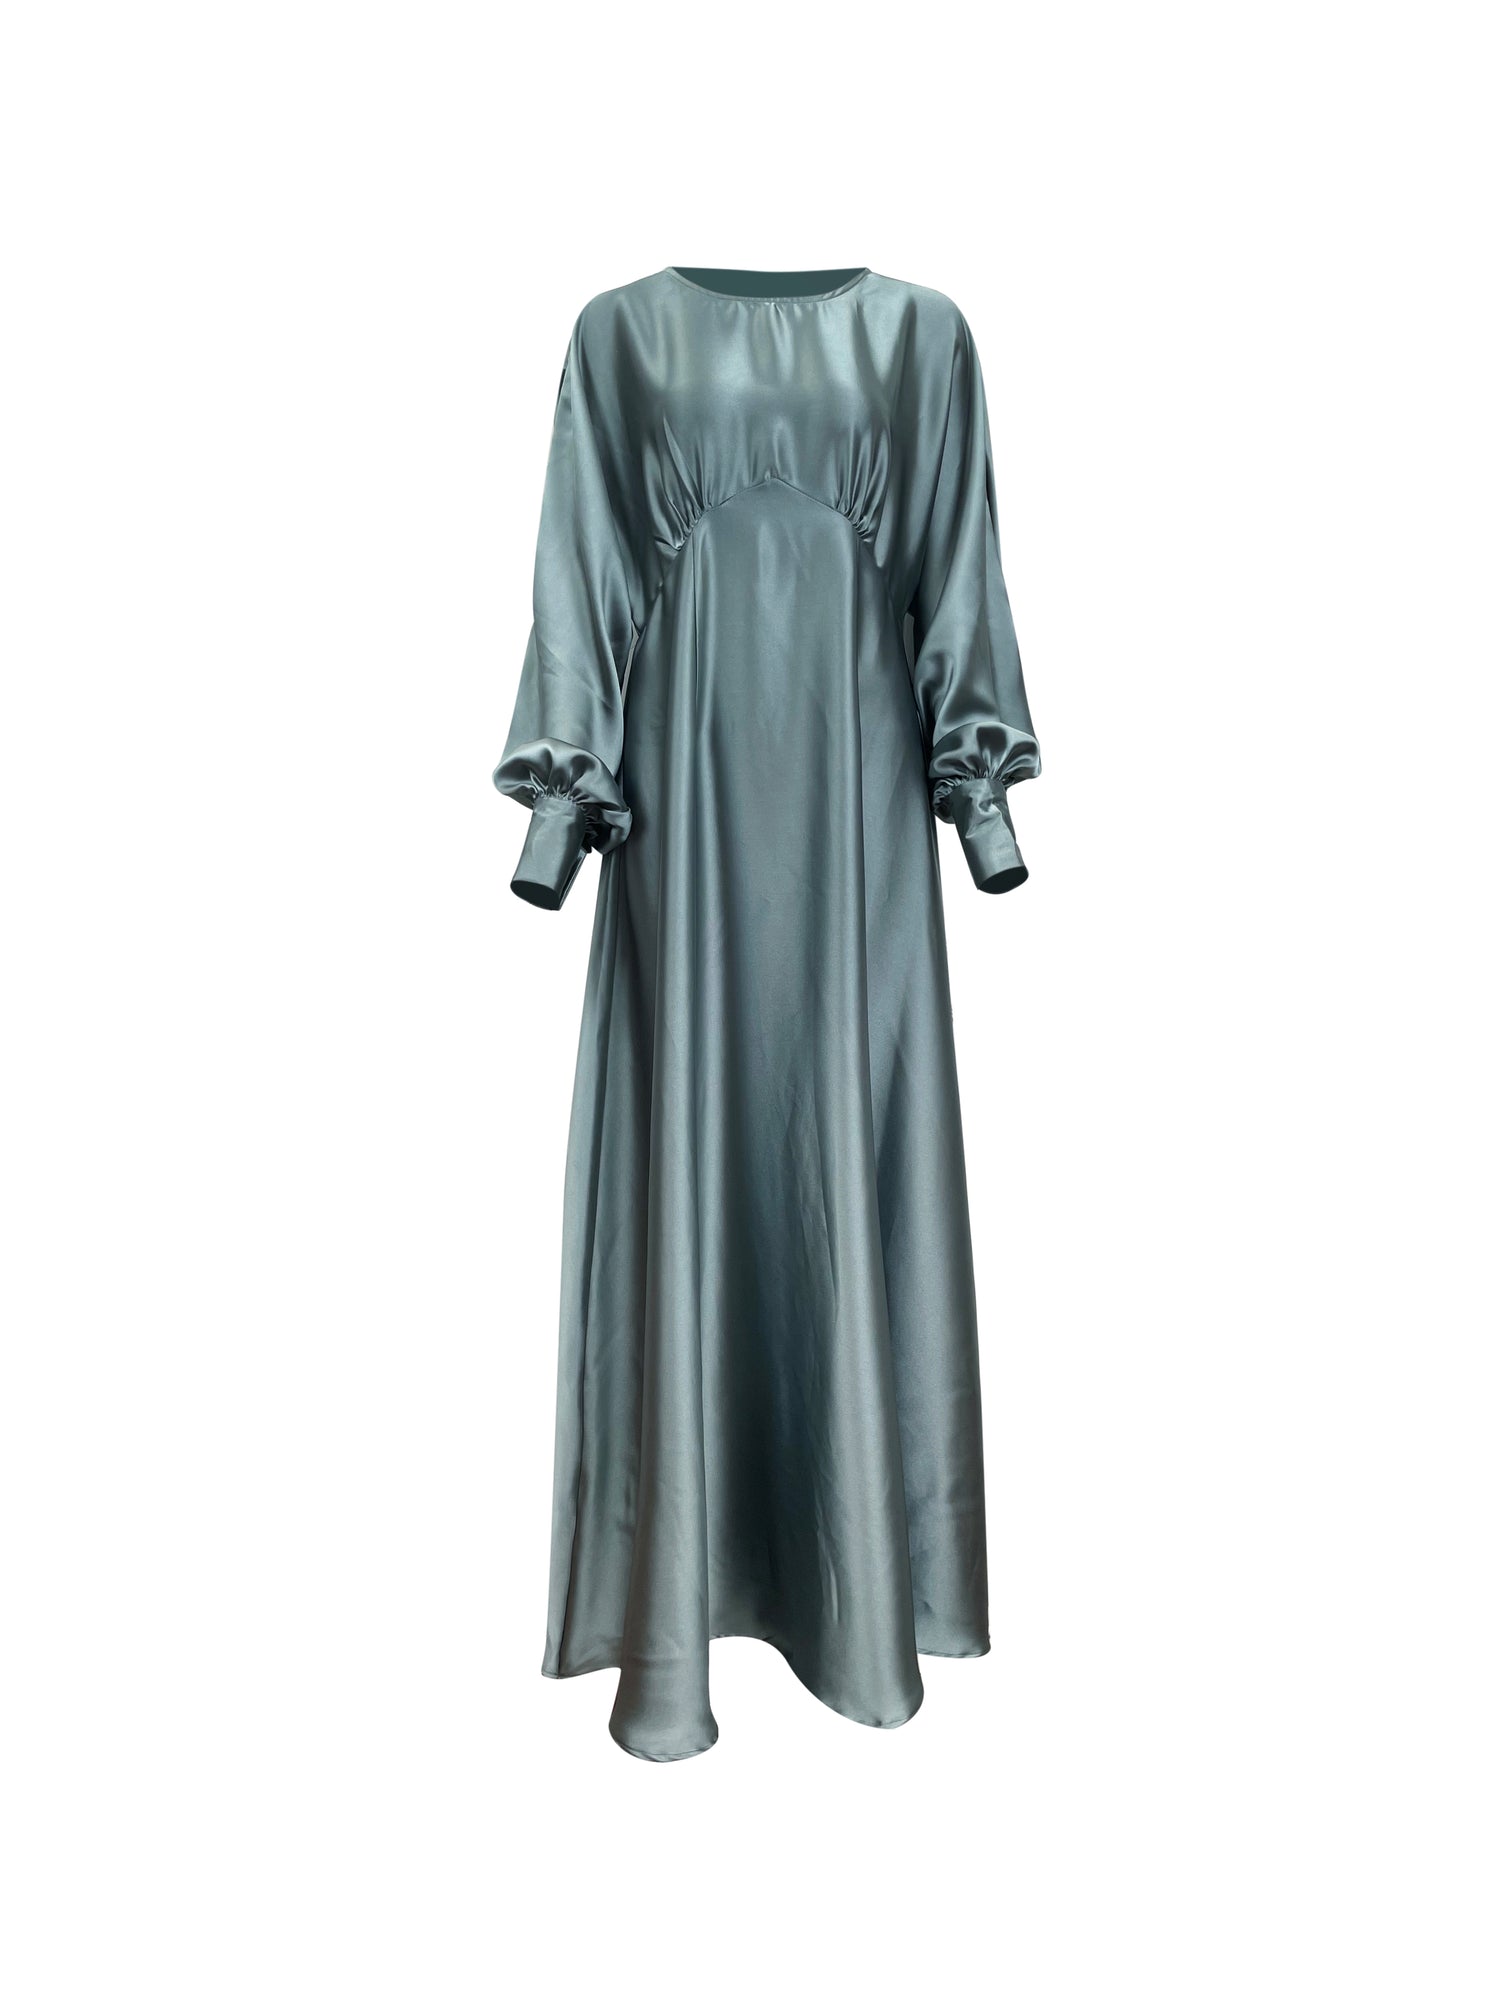 Imelda Batwing Dress - Pale Jade